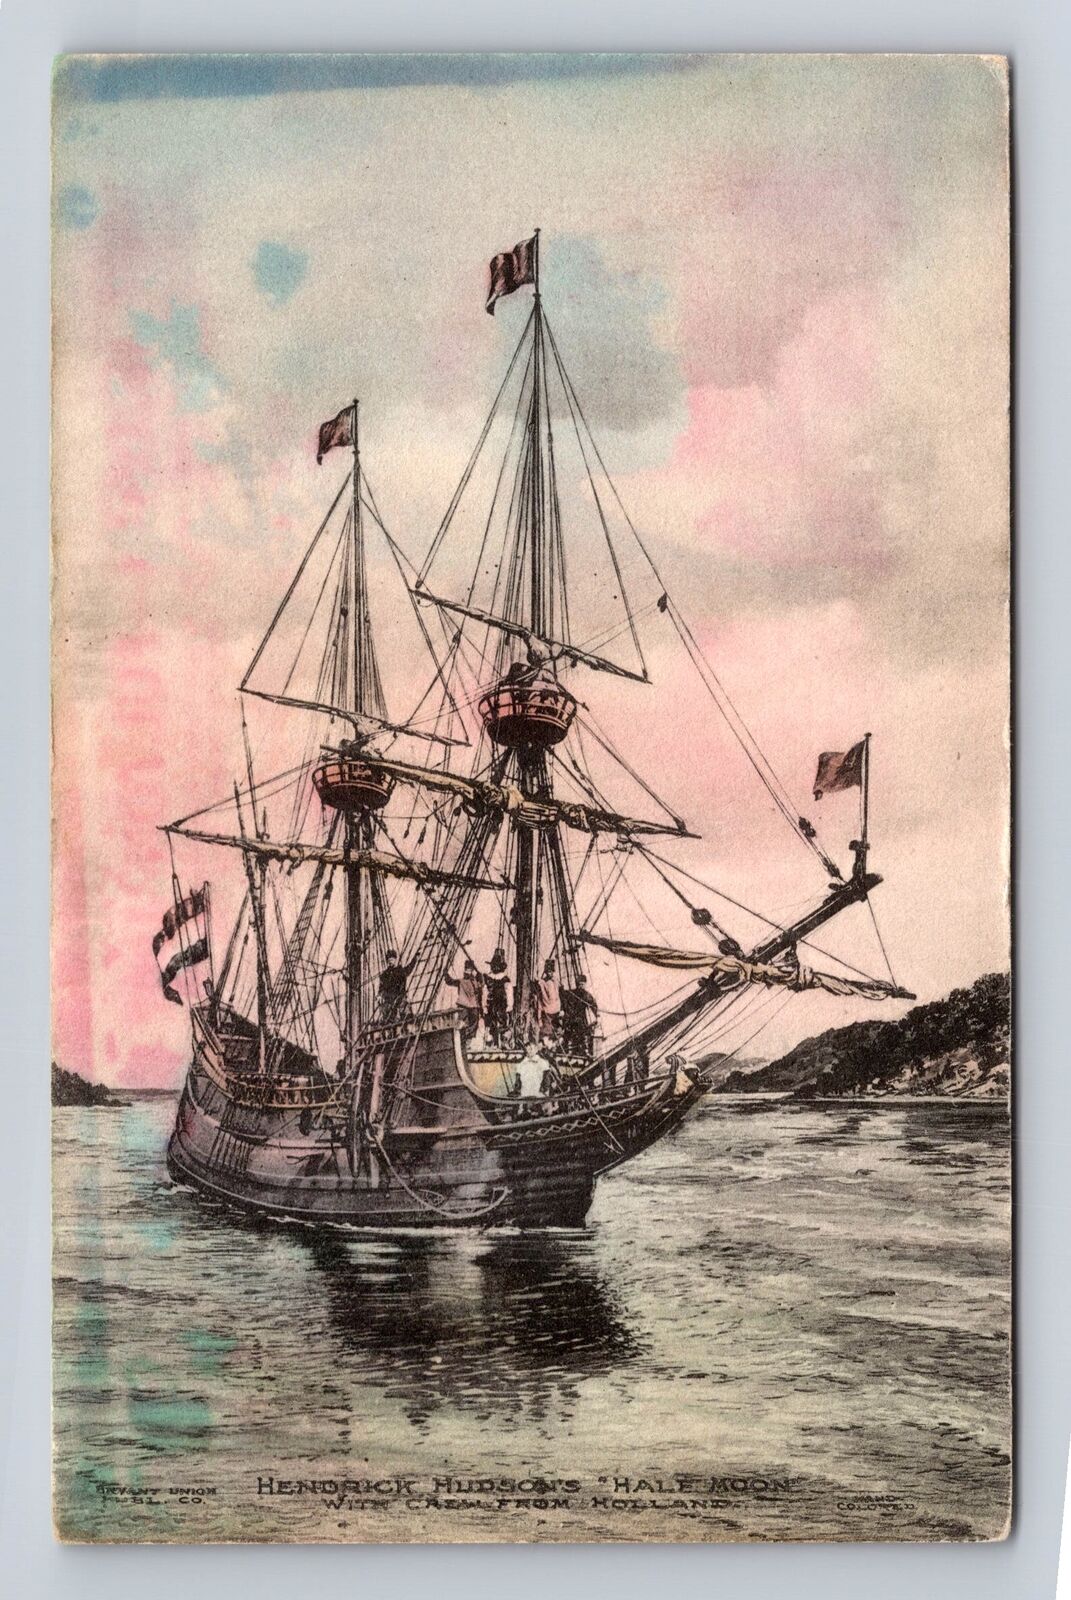 Hudson River NY-New York, Hendrick Hudson's Half Moon Ship, Vintage Postcard